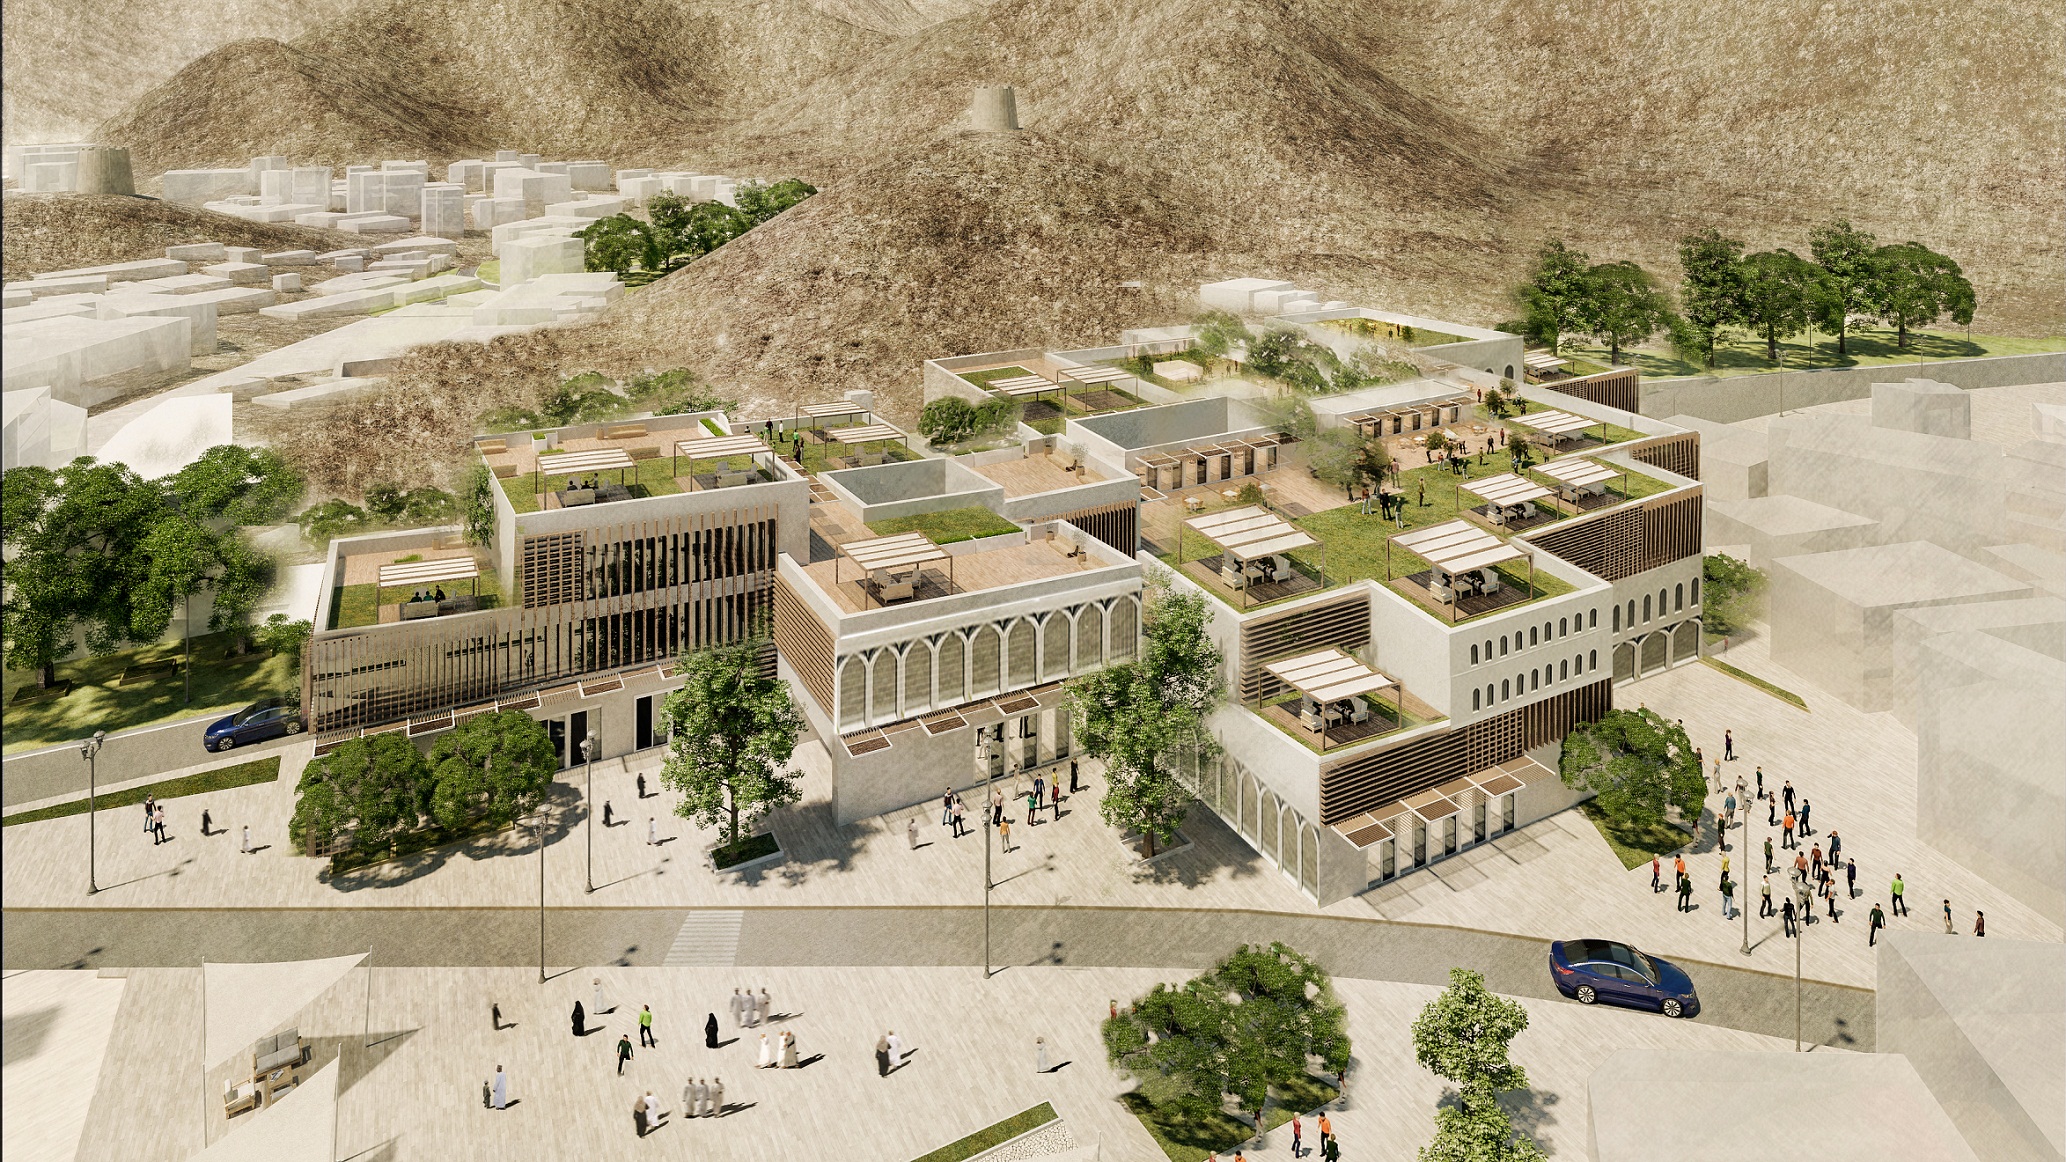 Oman tourism: Muscat Municipality presents Muttrah redevelopment project design